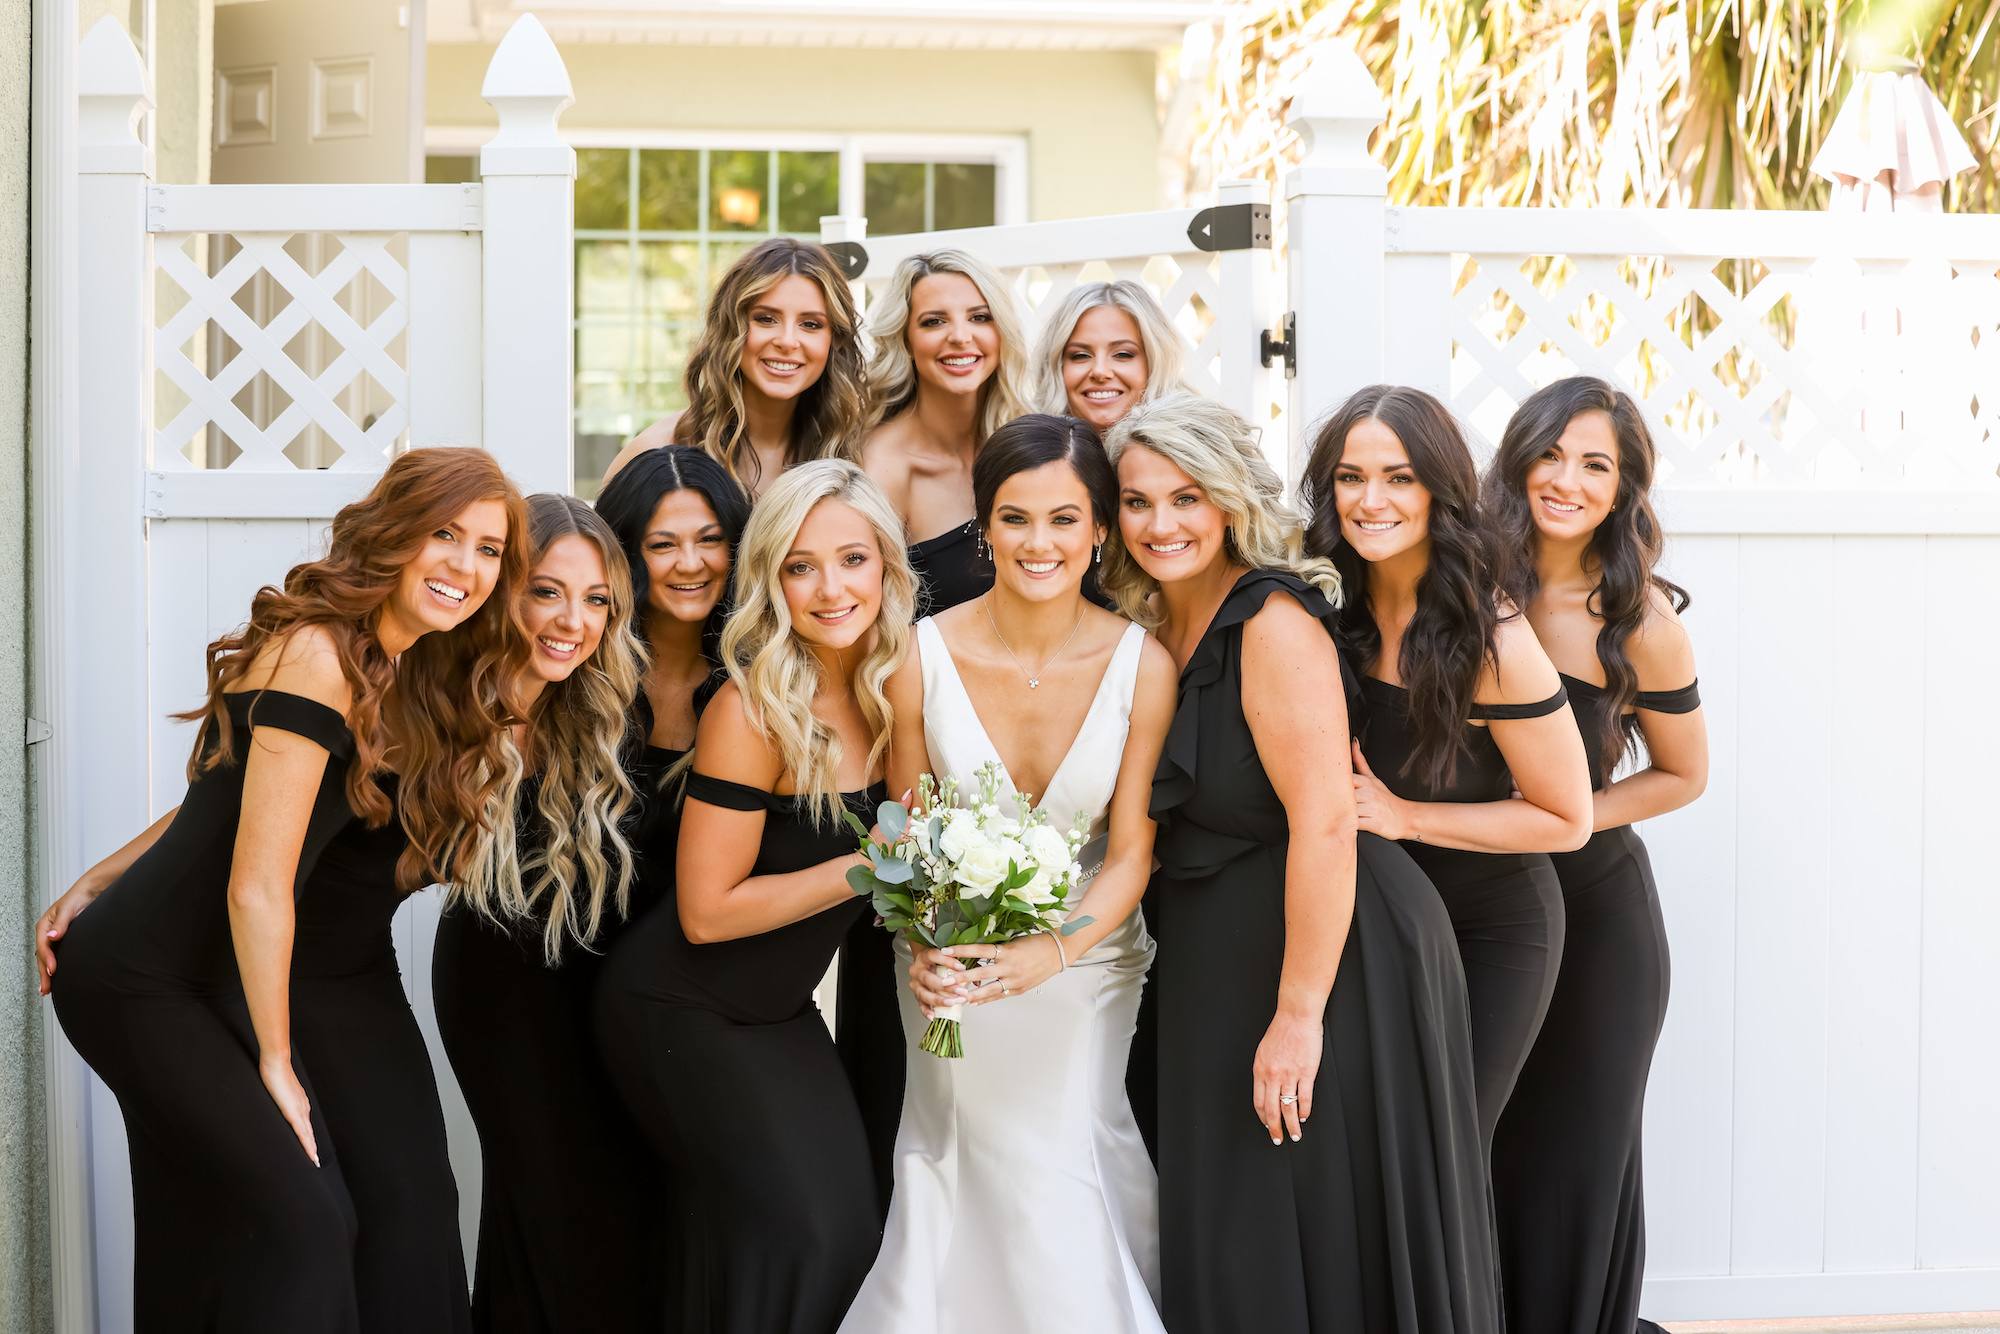 Bride and Bridesmaids in Black Floor Length Dresses Wedding Portrait